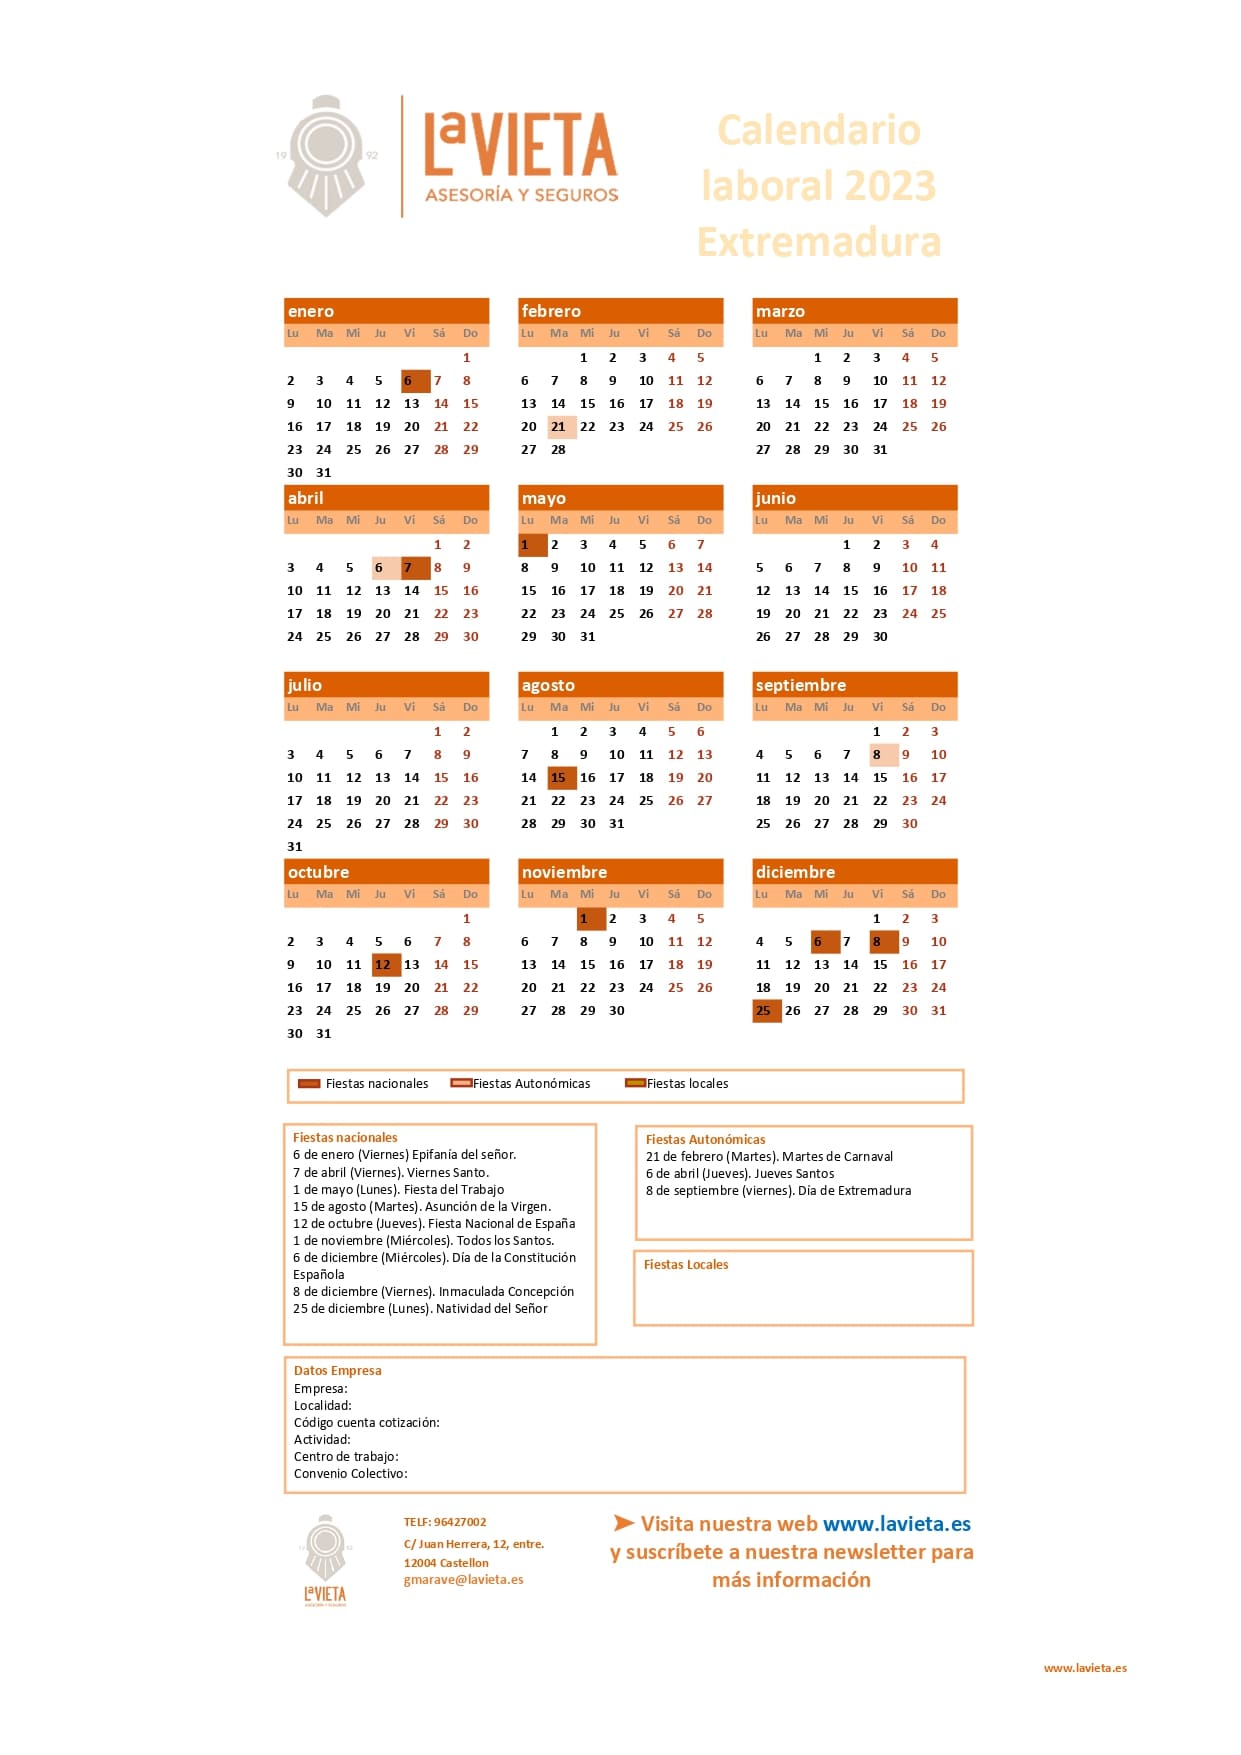 Calendario laboral extremadura 2023 pdf para imprimir festivos extremadura 2023 calendario del trabajador extremadura 2023